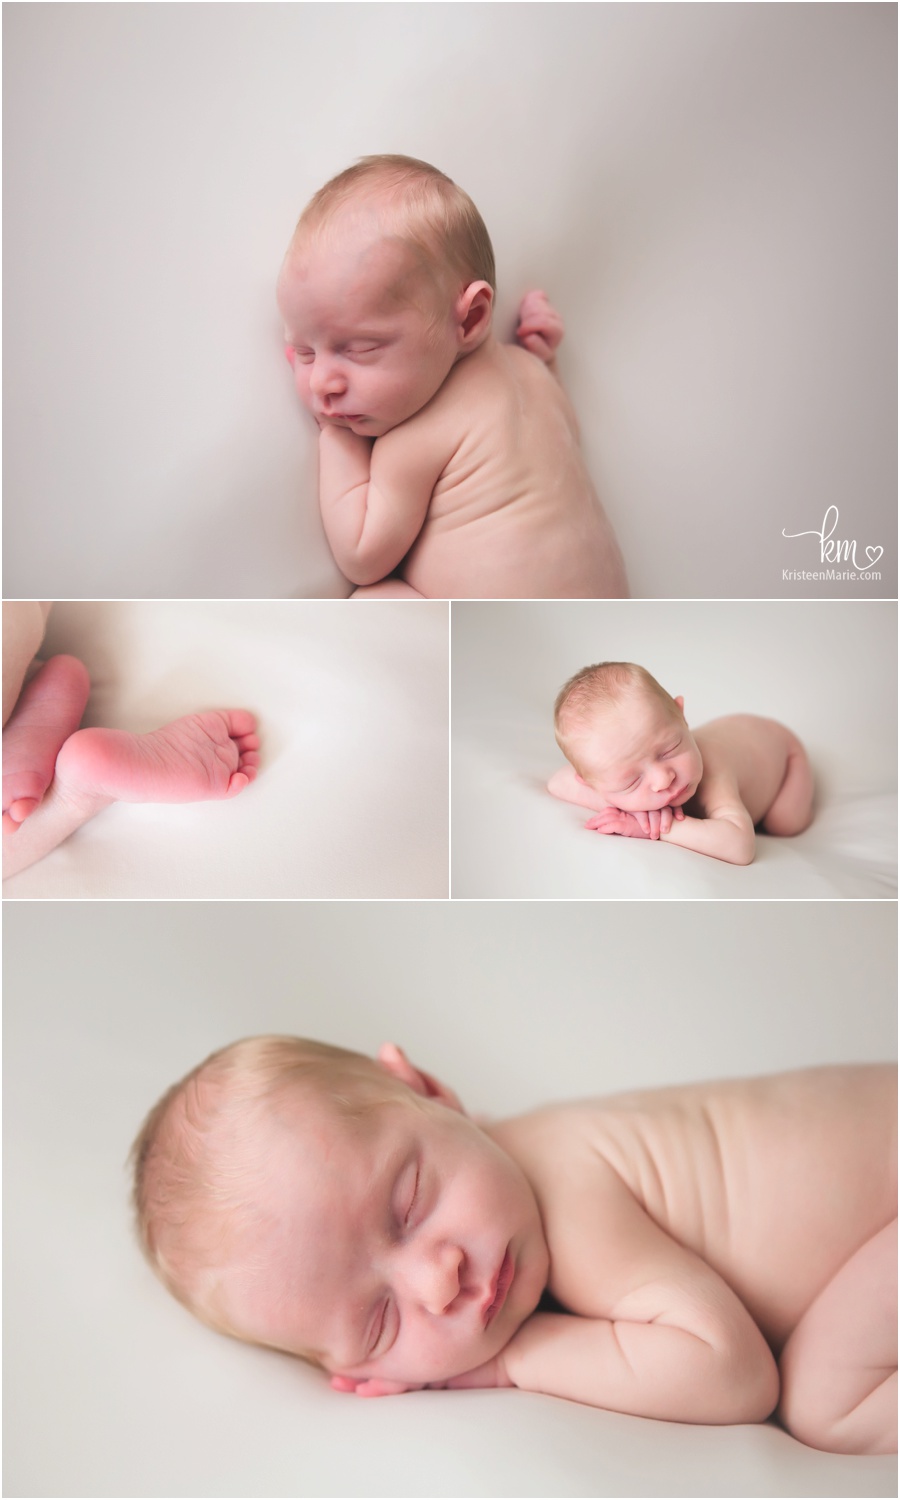 simple sleeping newborn boy on white backdrop - simple, timeless, classic newborn photography